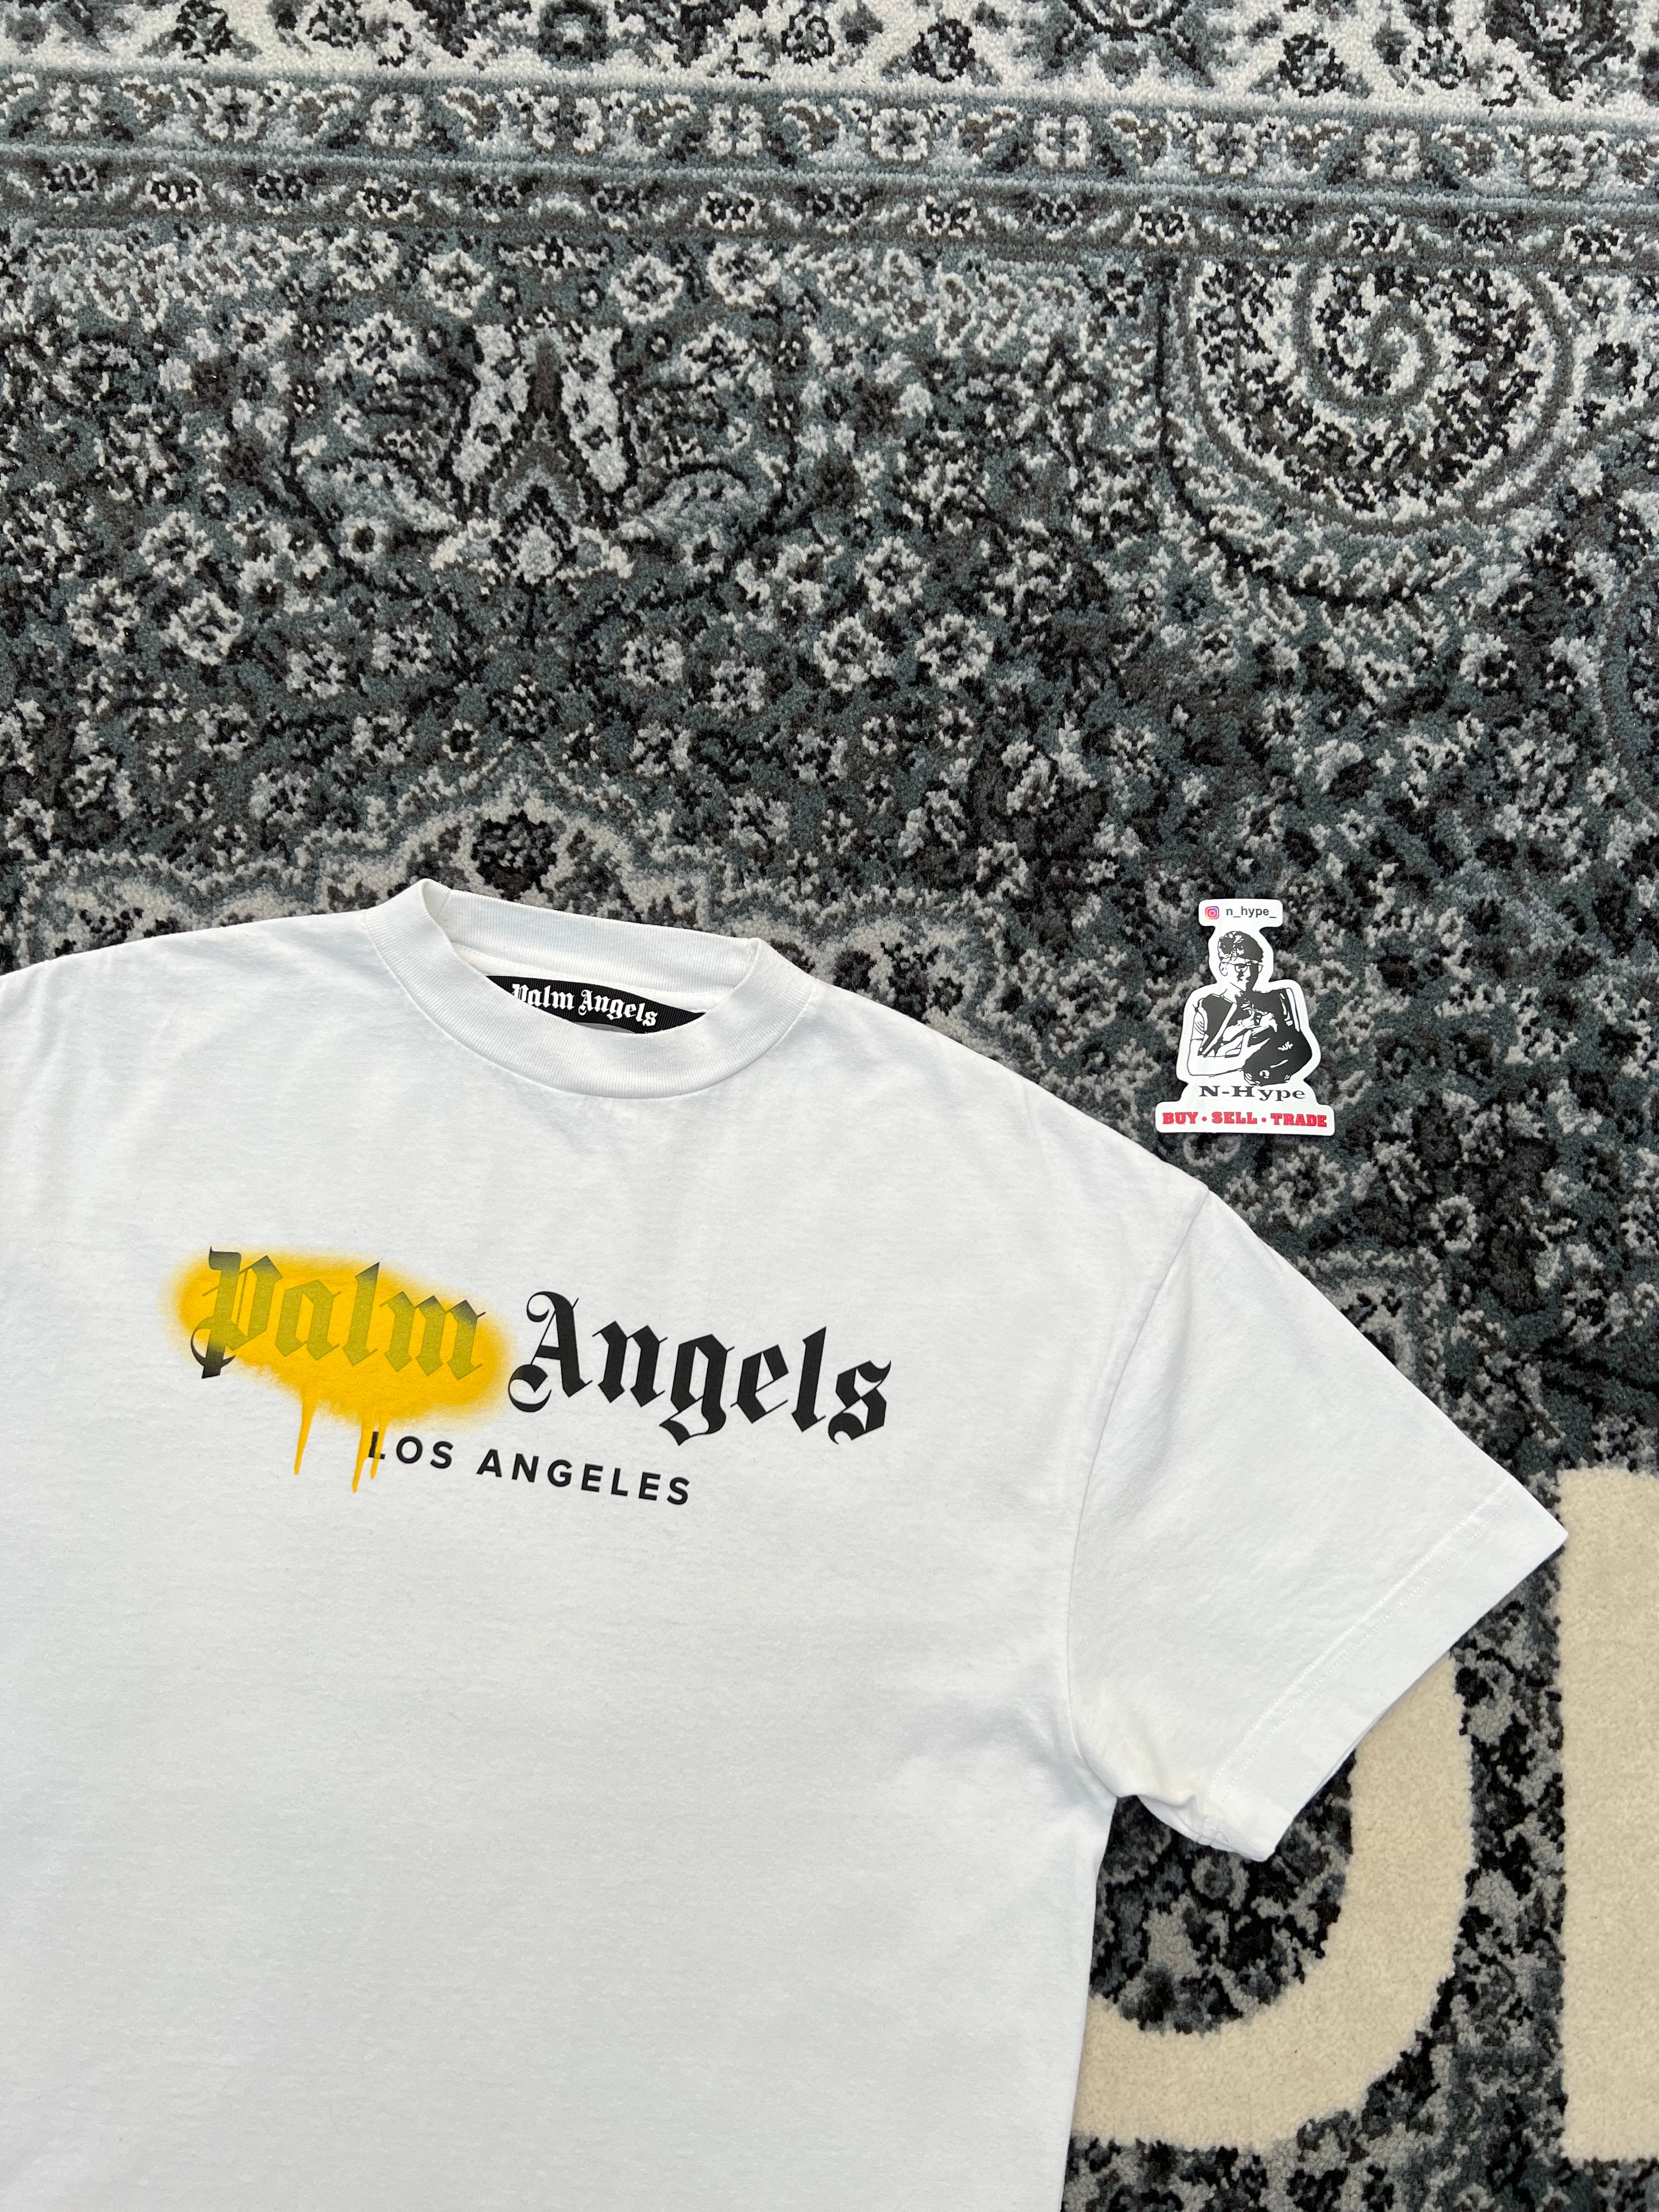 Palm Angels Los Angeles Sprayed T-Shirt White Showroom NHype Lodz Polska